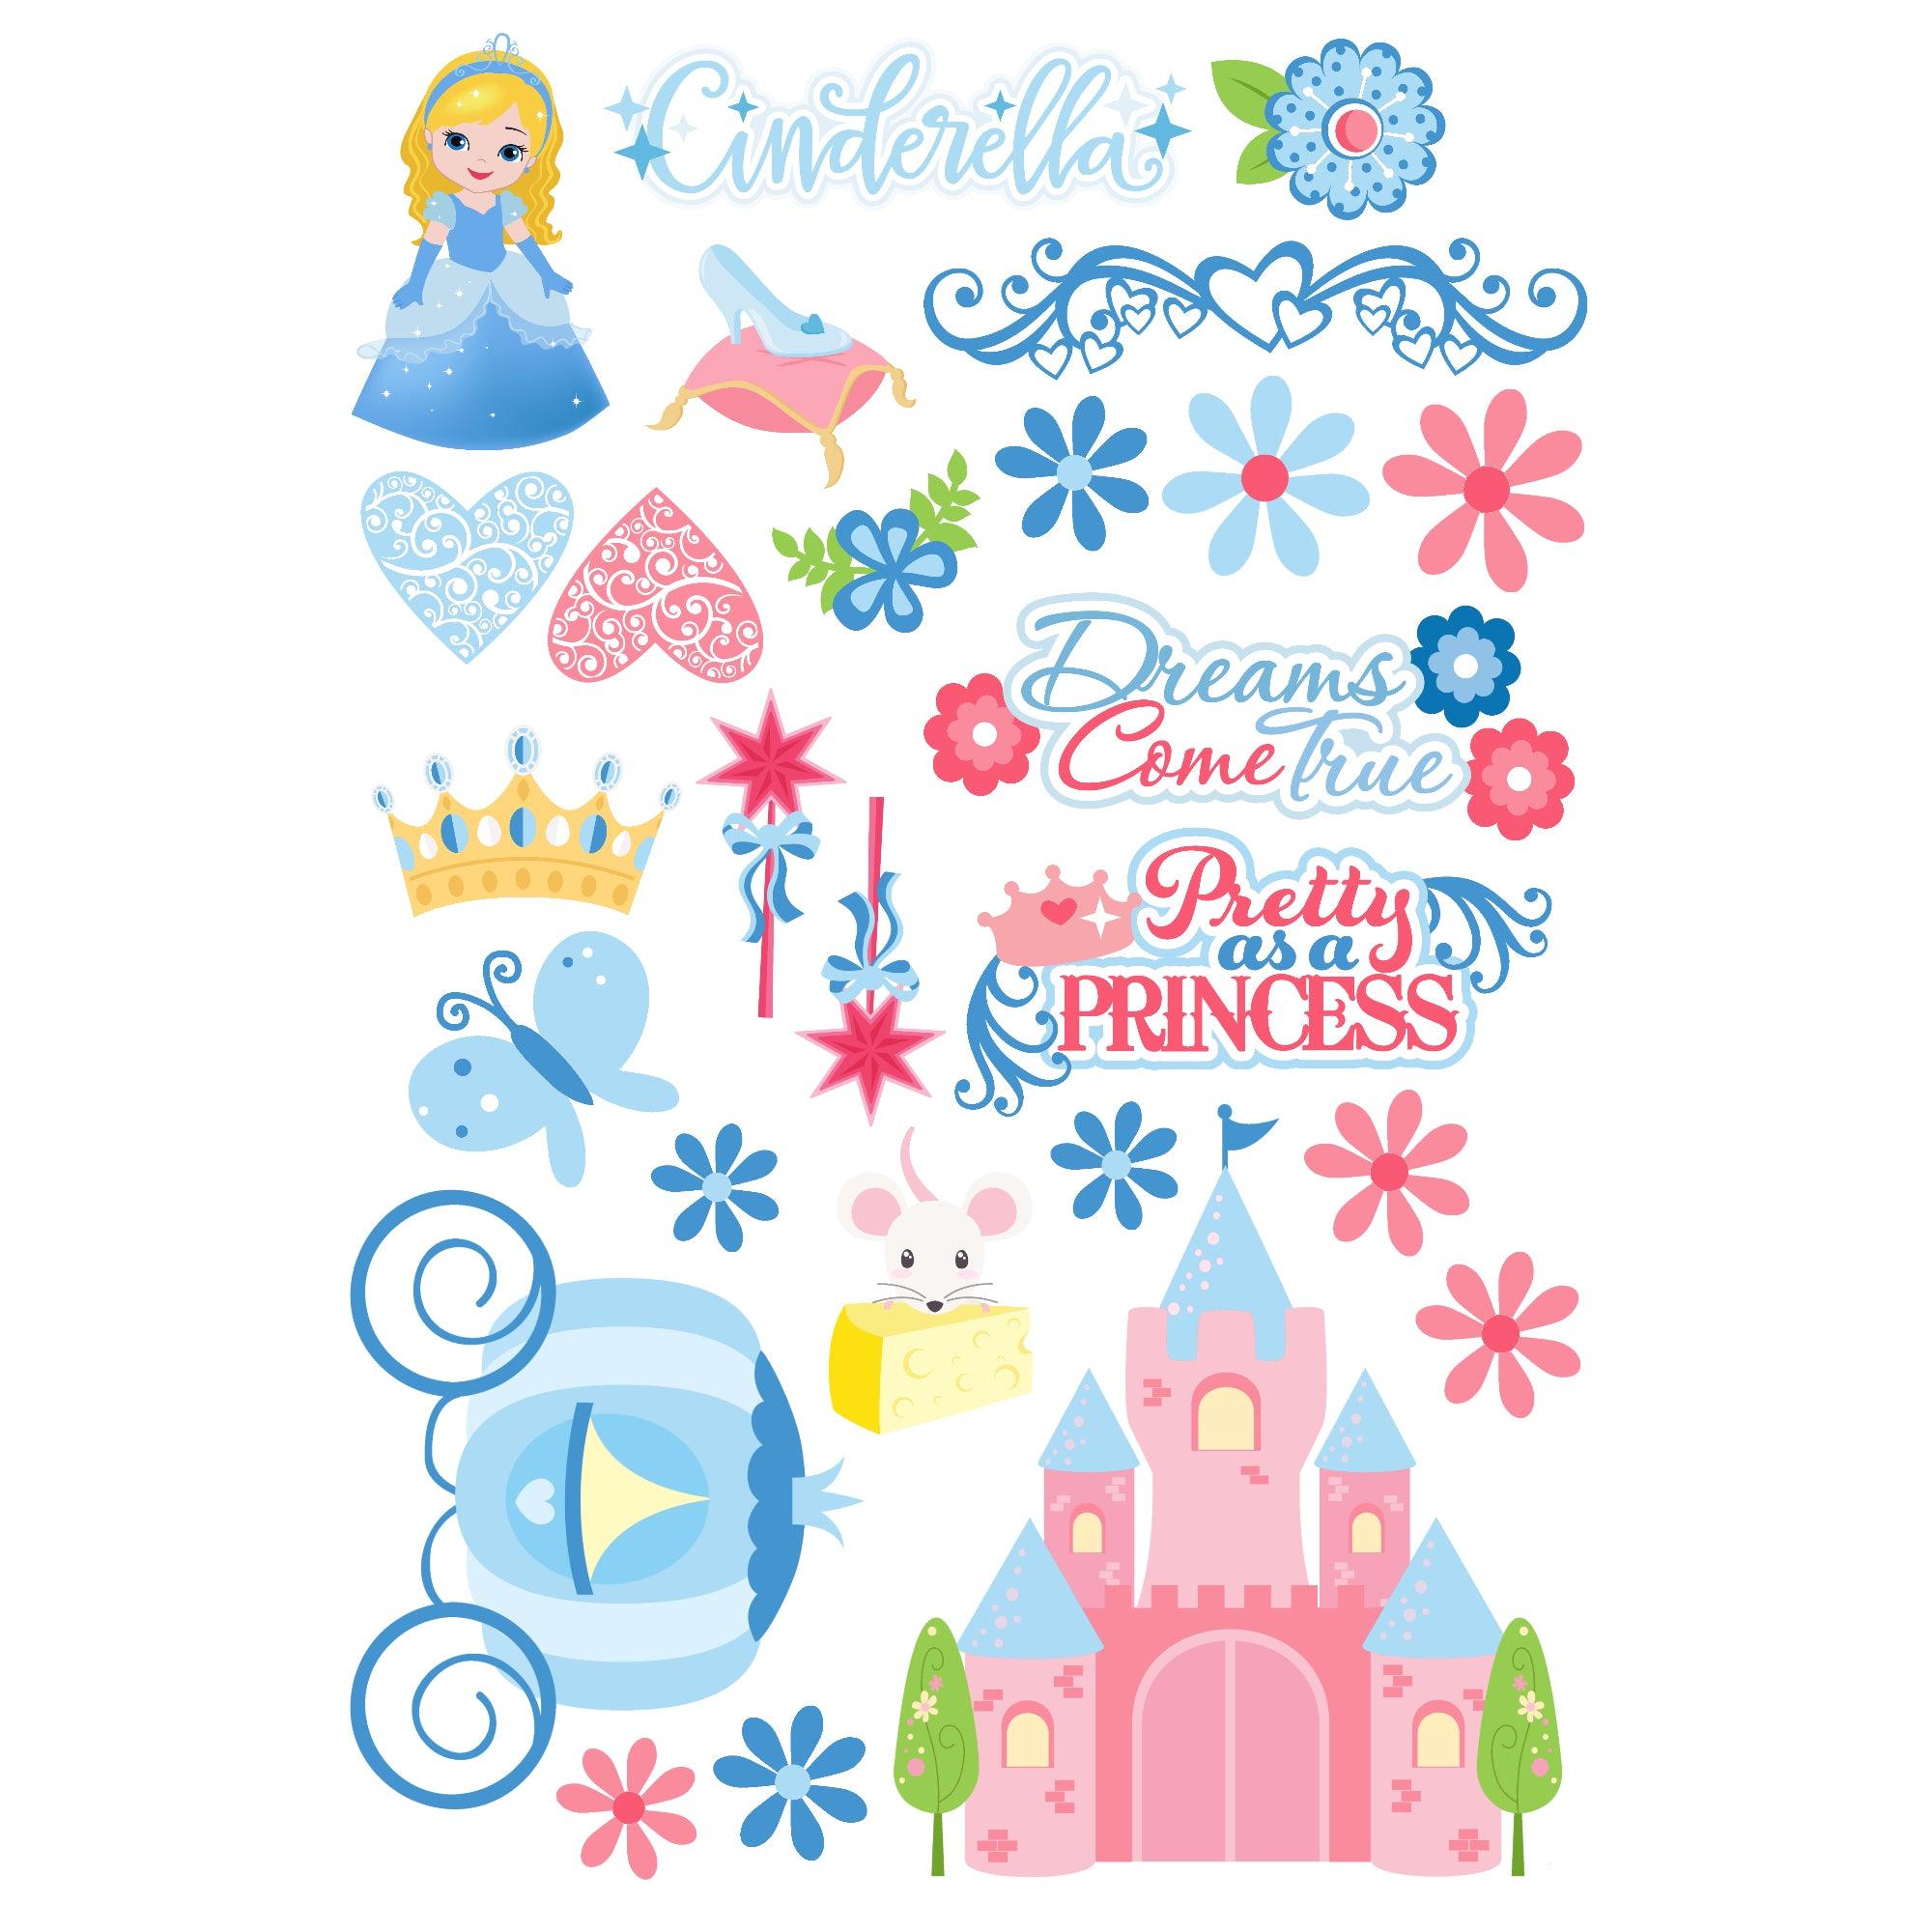 Cinderella 12 x 12 Scrapbook Paper & Embellishment Kit by SSC Designs